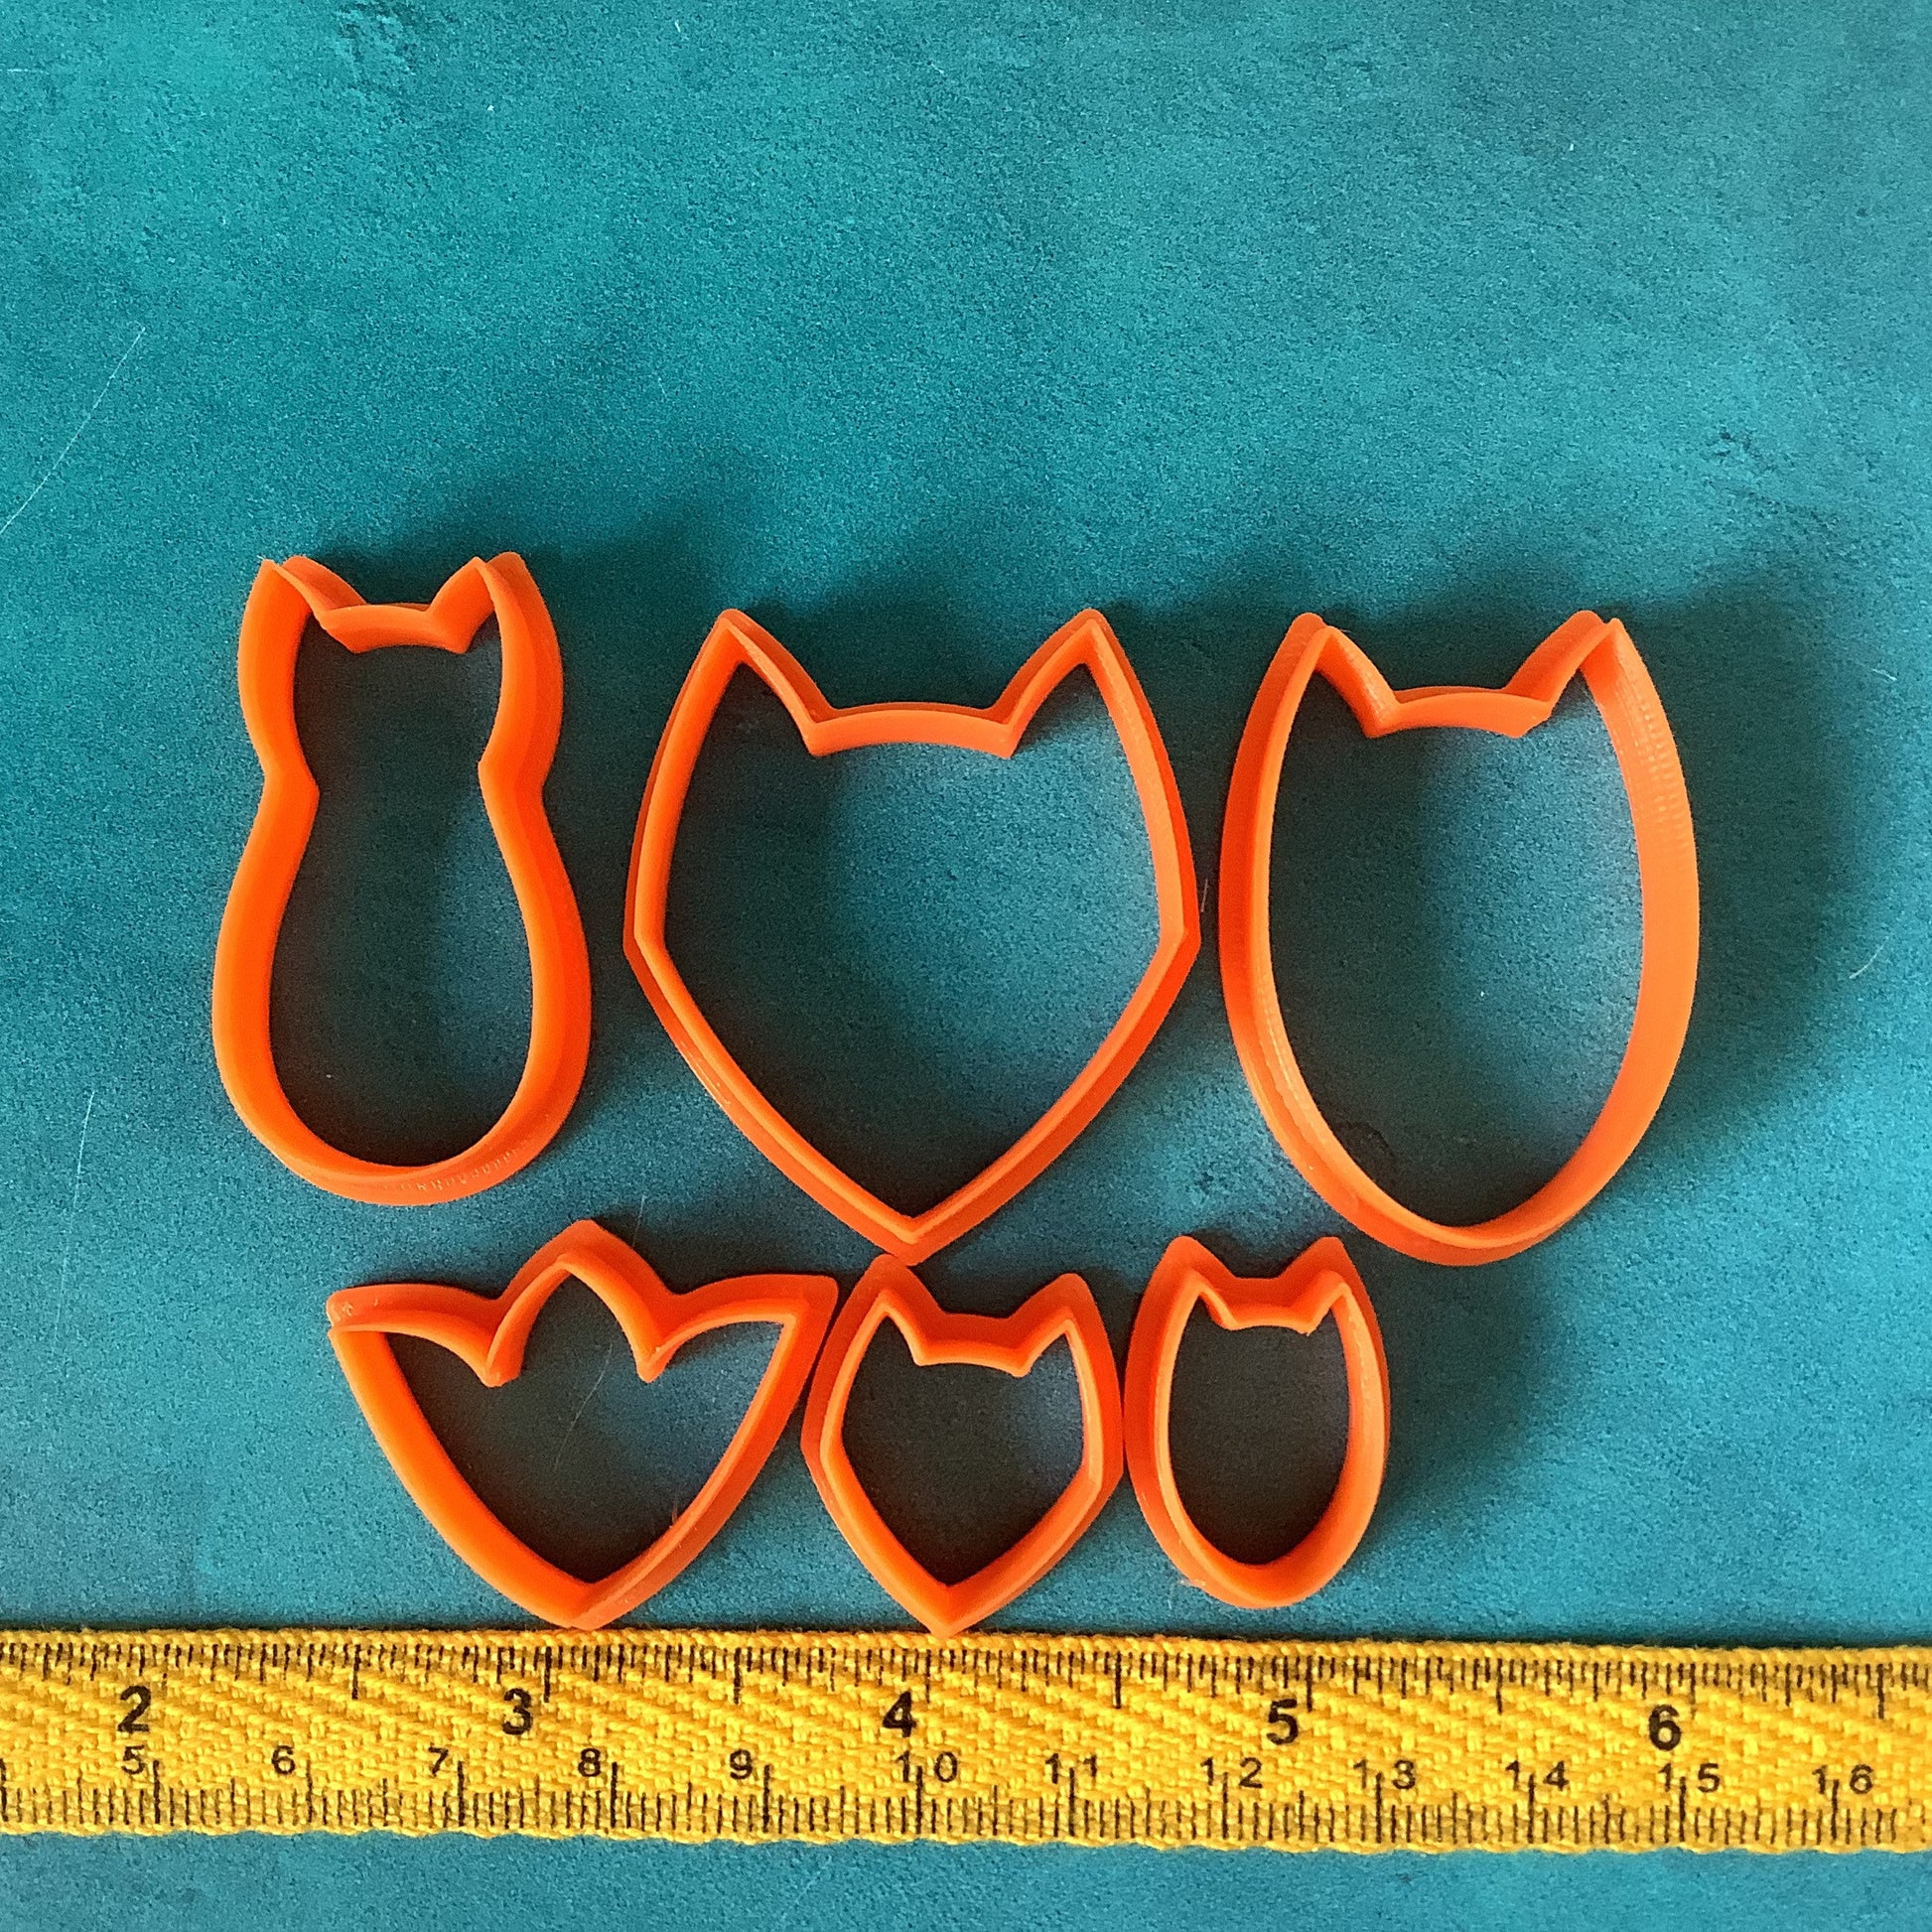 Polymer clay cutter 3D print cutters Jewelry Earrings Cat shape